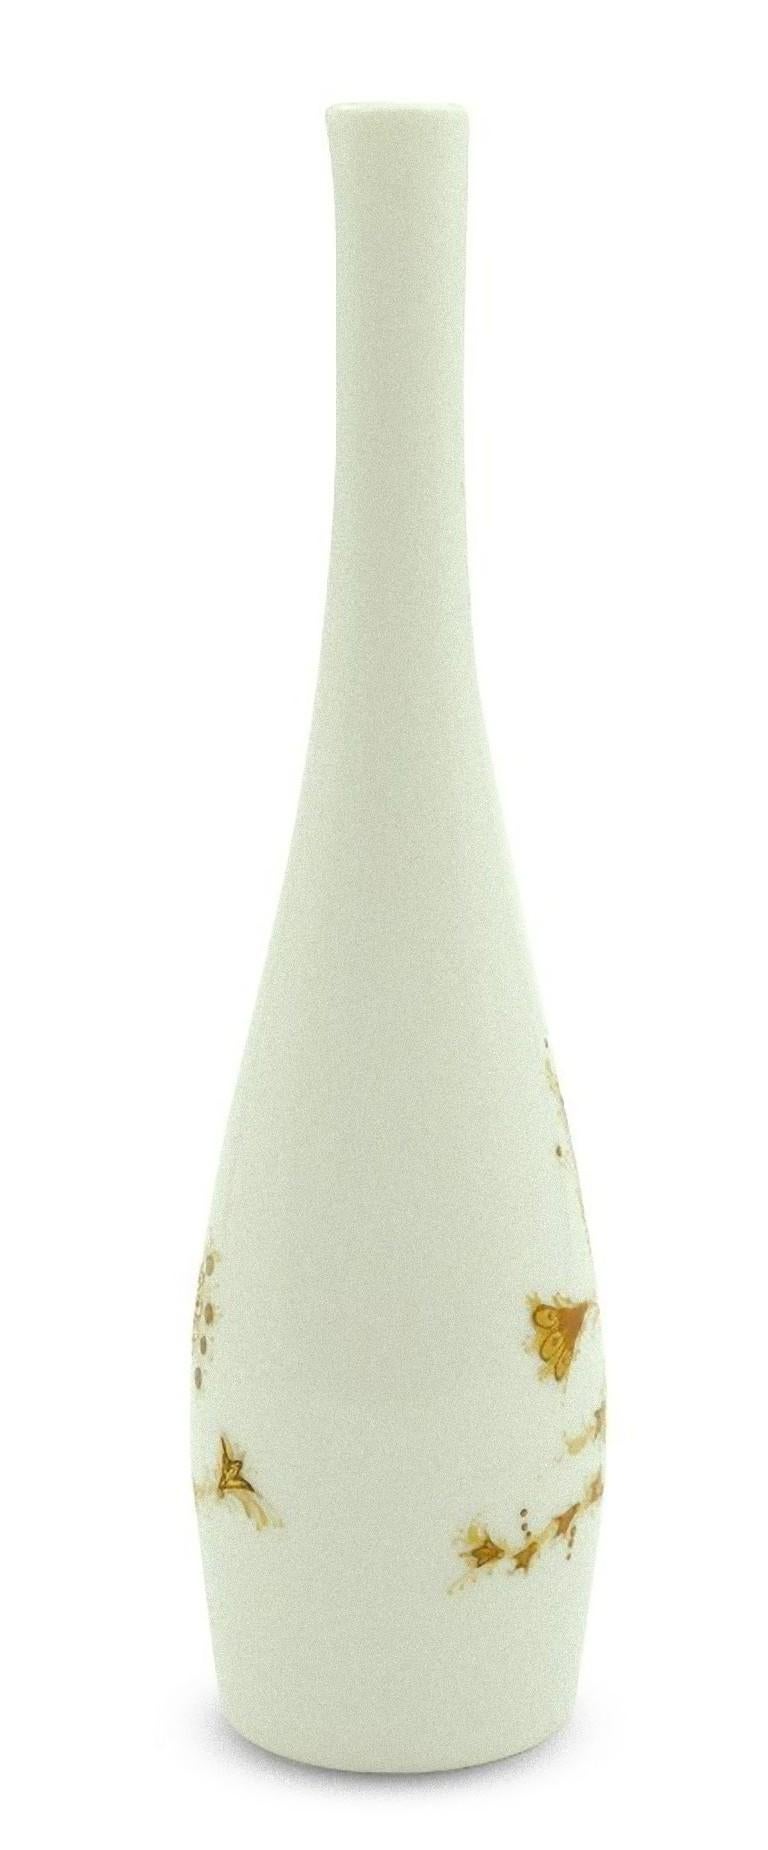 German Rosenthal Vase, Bjorn Wiinblad for Rosenthal, Late 20th Century